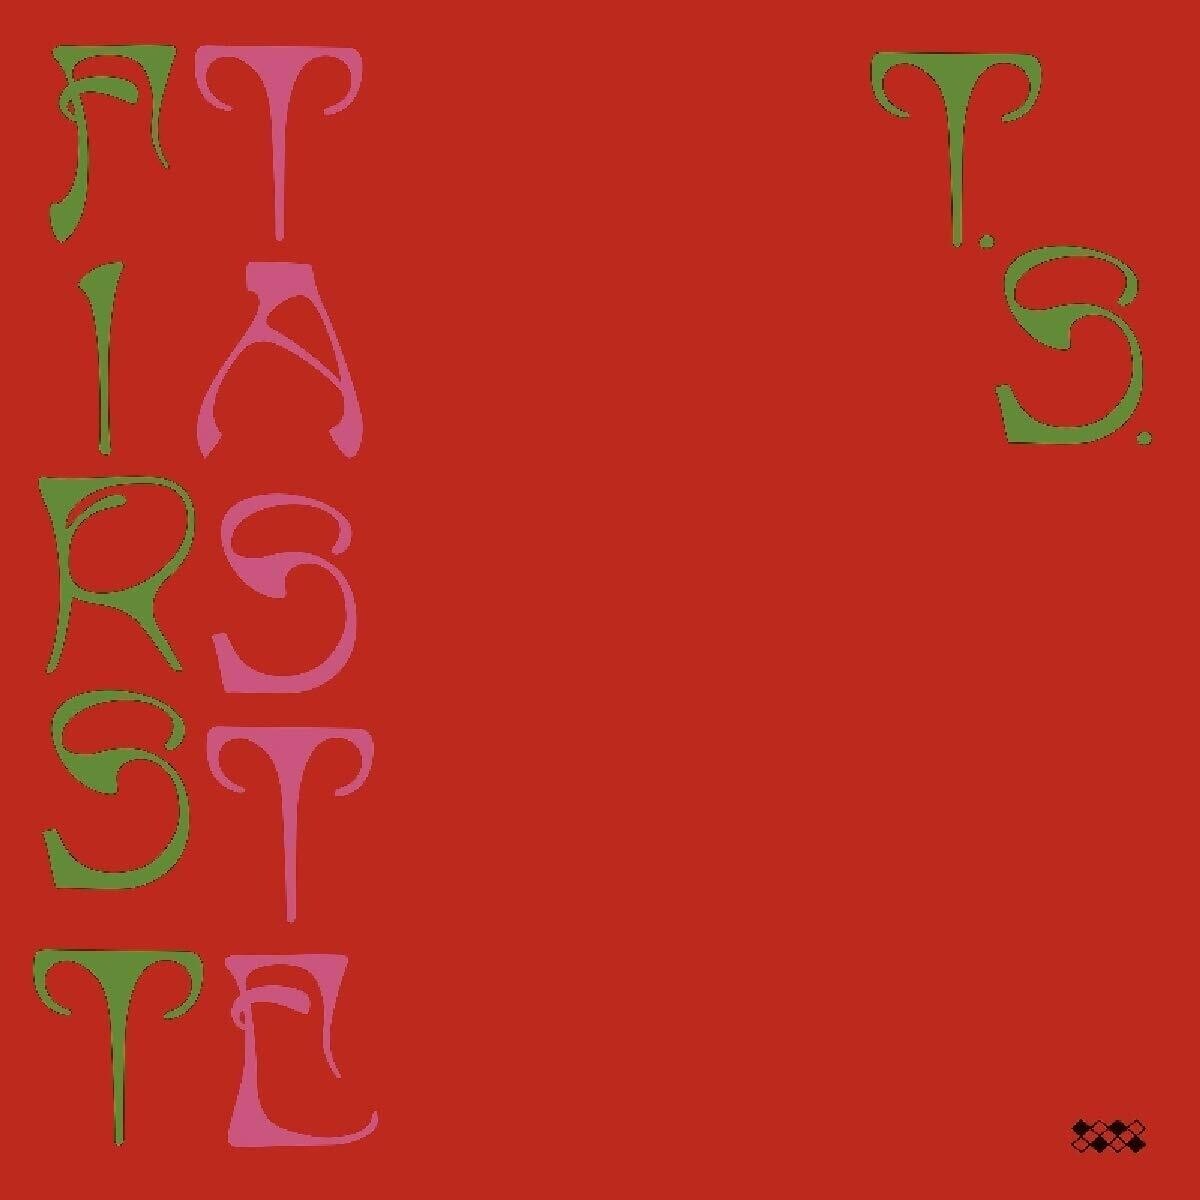 Ty Segall "First Taste"